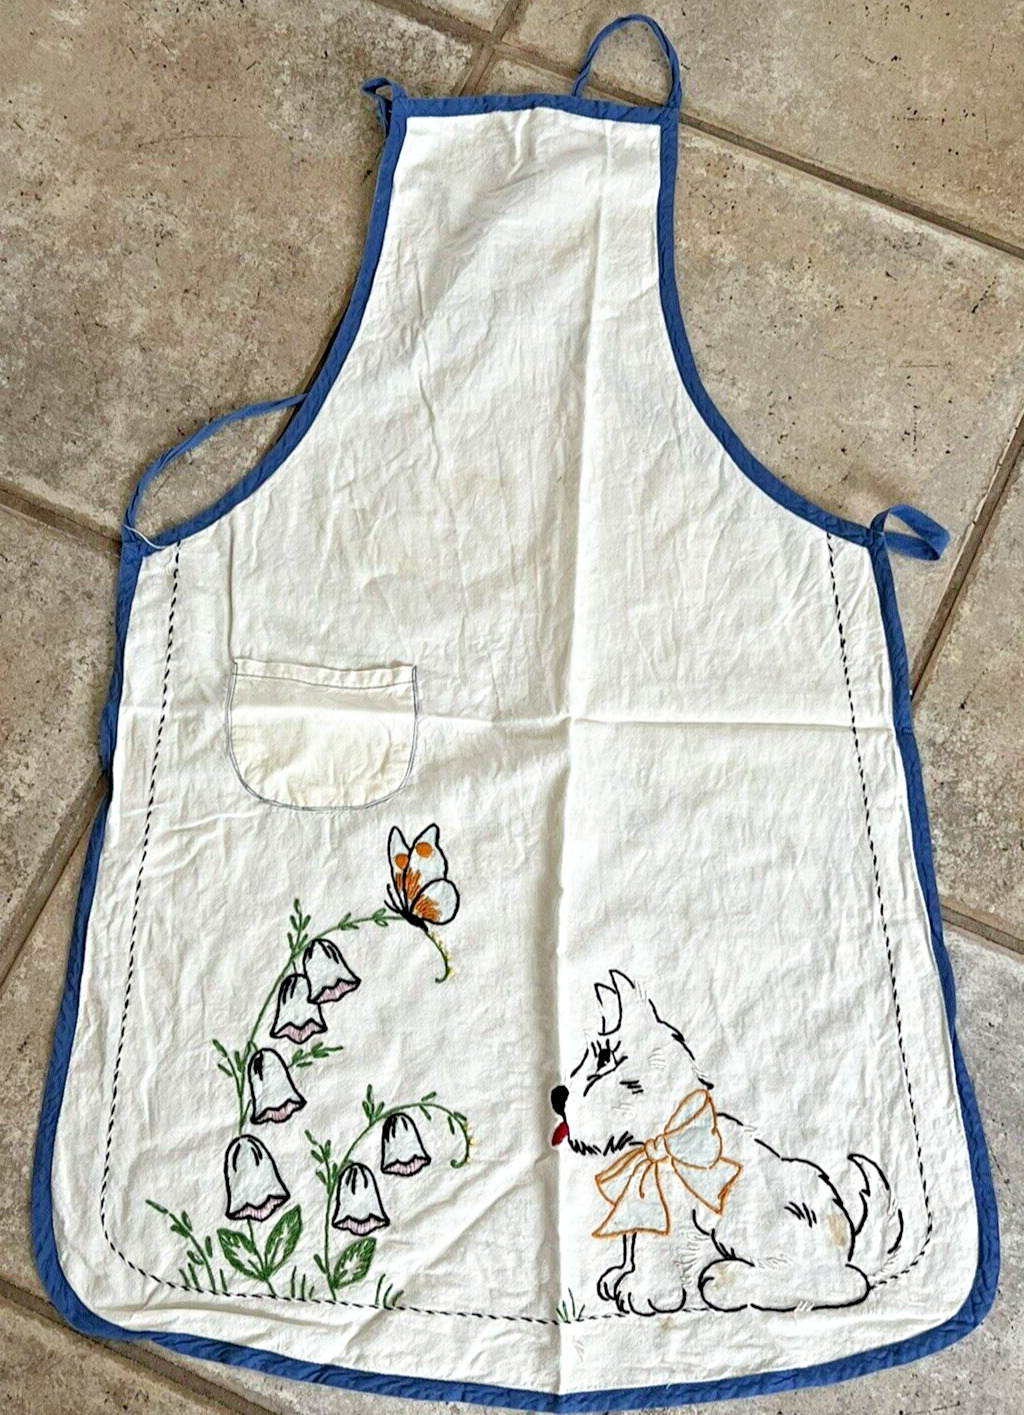 Vintage 1940s Hand Embroidered Bib Apron - Scottie / Westie Dog and Flowers